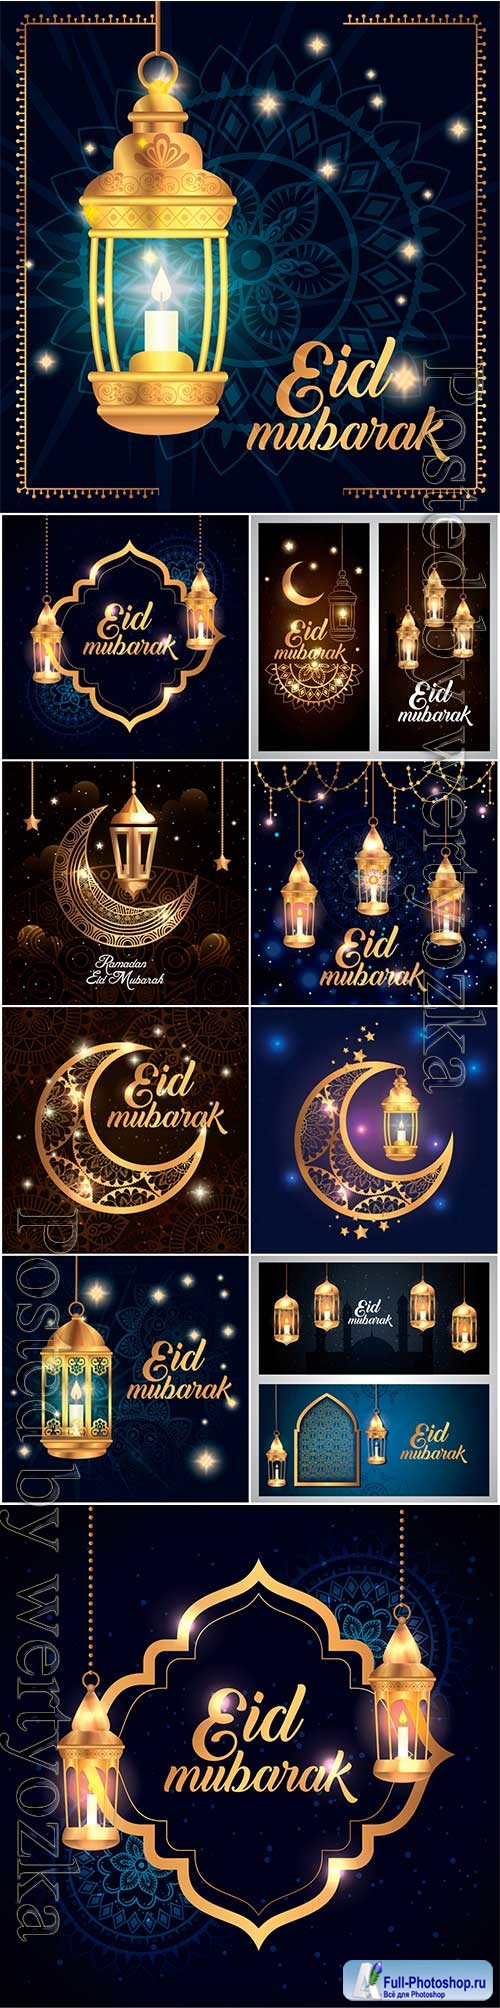 Eid mubarak poster with lantern hanging and decoration vector illustration